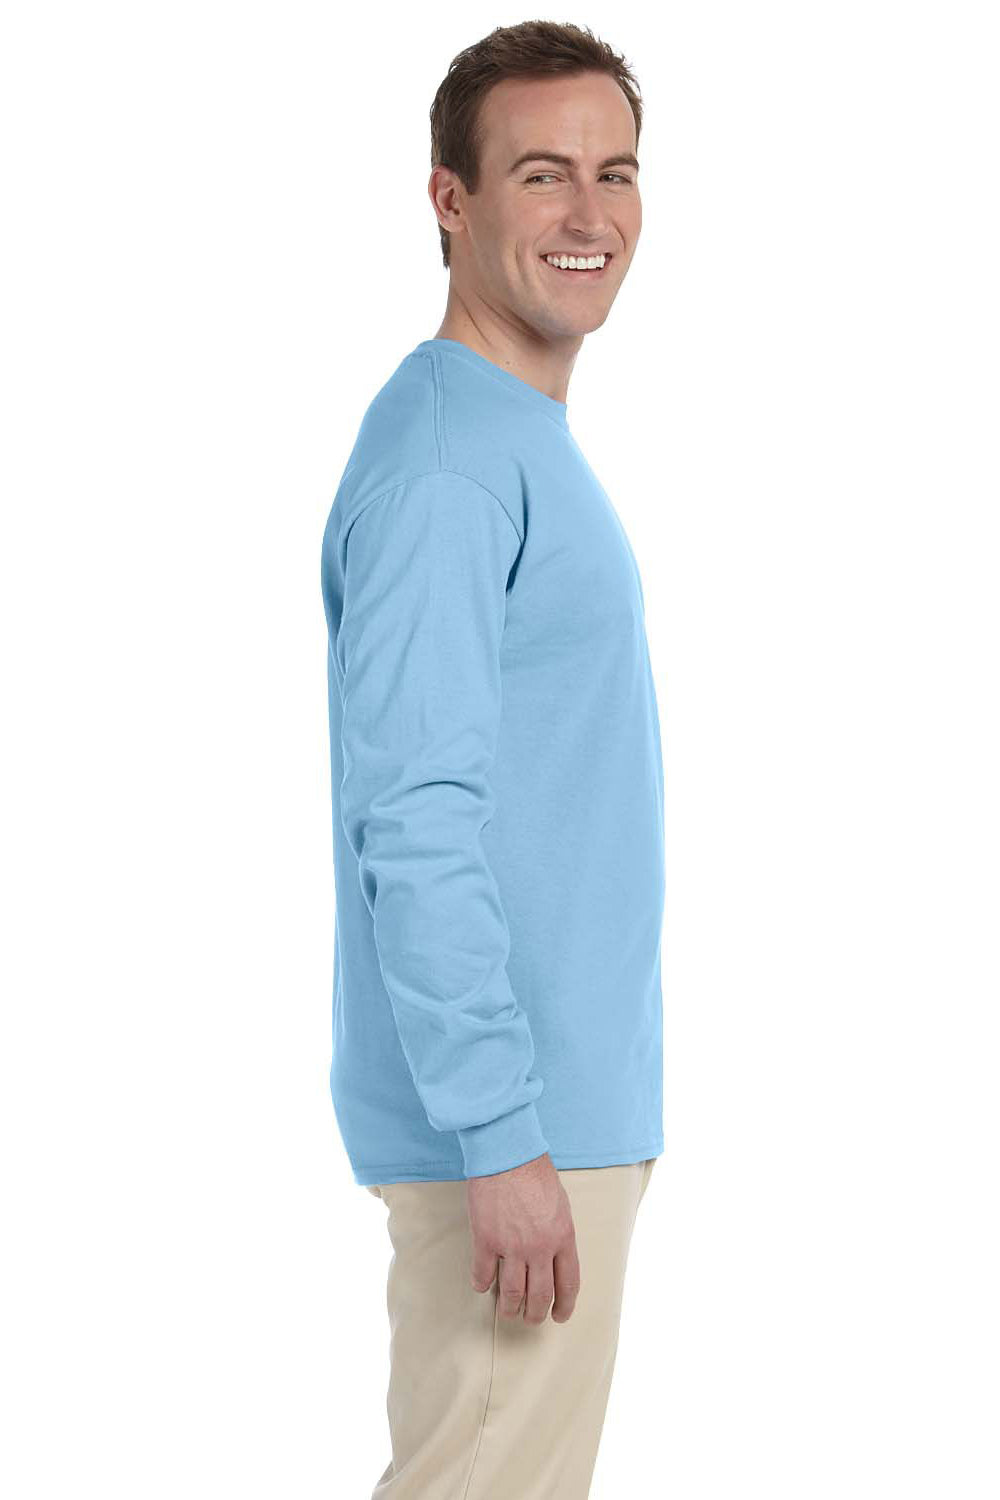 Fruit Of The Loom 4930 Mens HD Jersey Long Sleeve Crewneck T-Shirt Light Blue Side